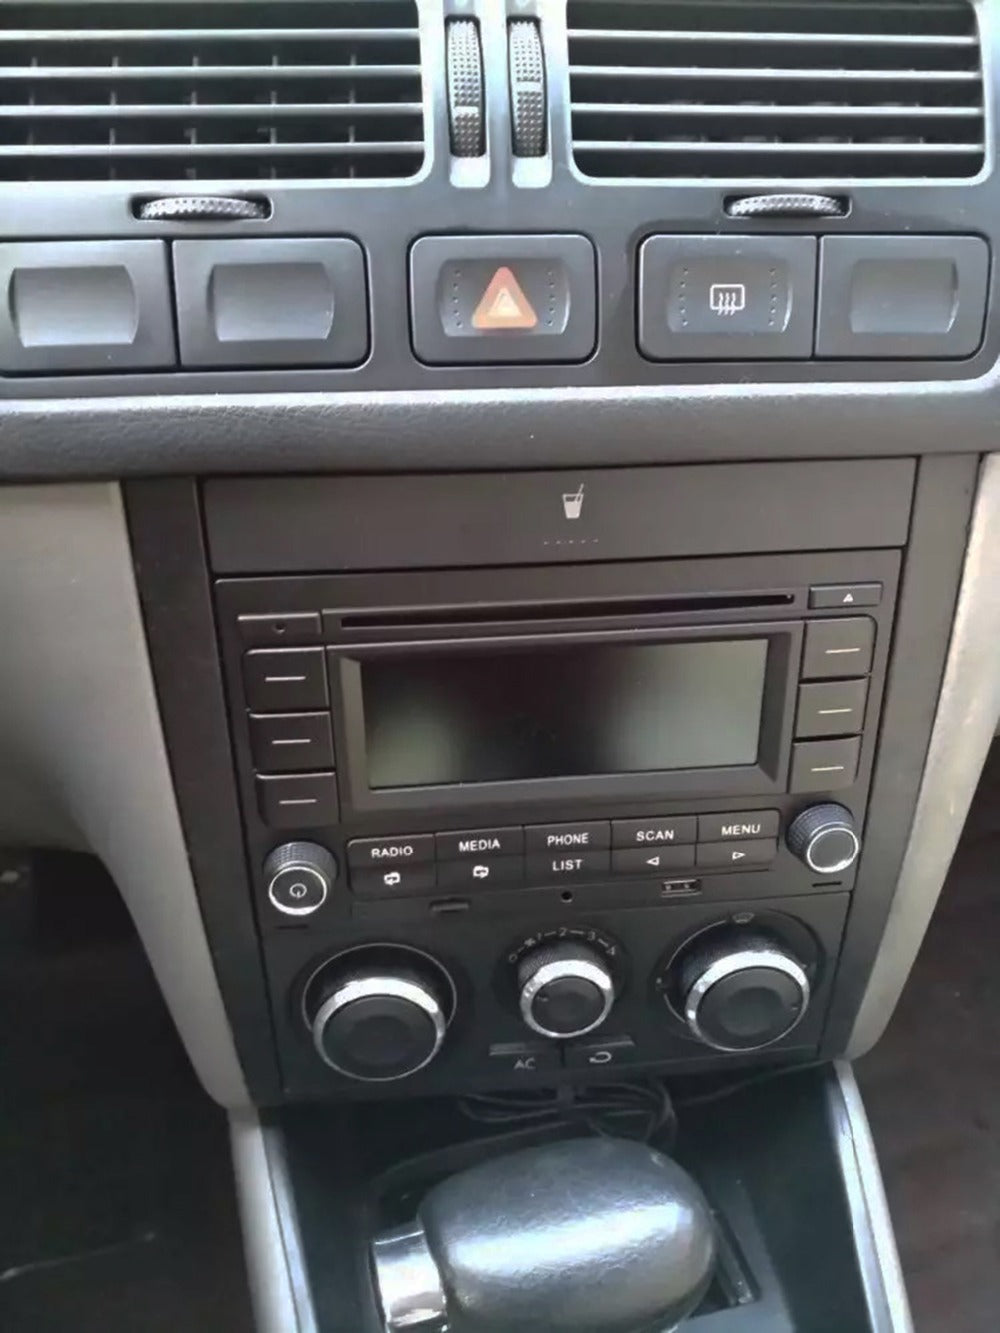  Autoradio Audio Stéréo RCN210 pour VW Golf MK4 Polo